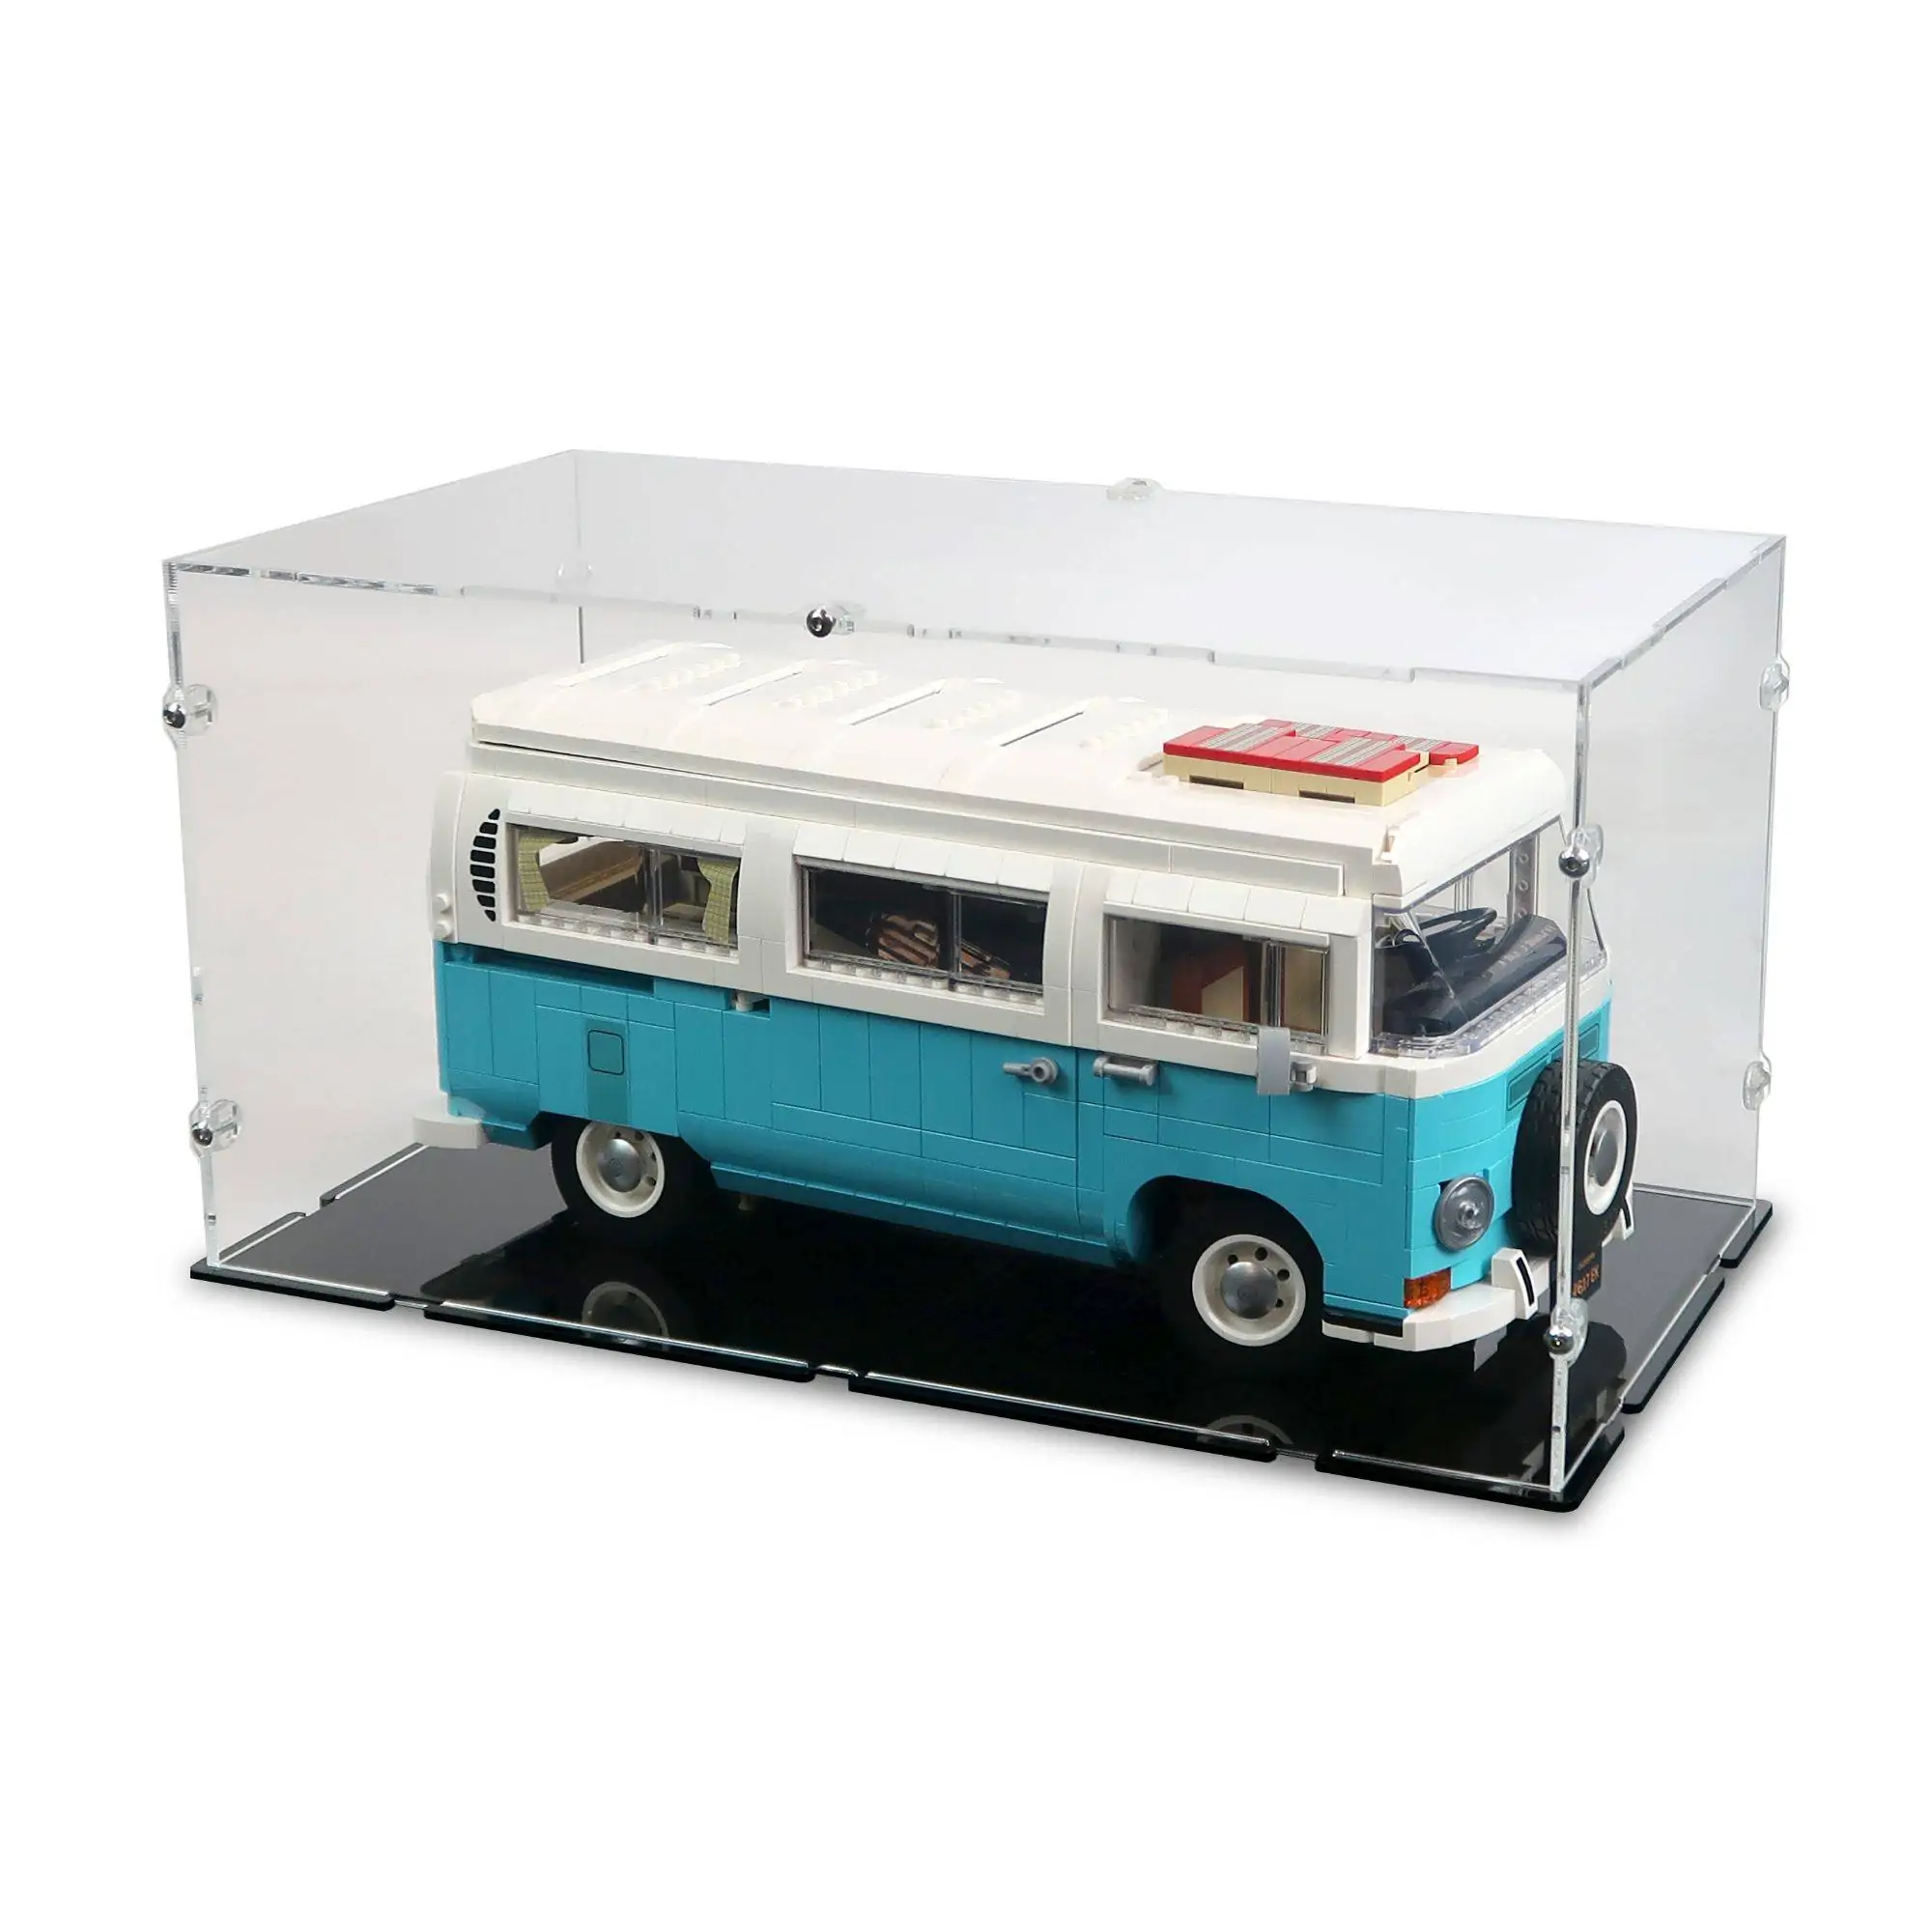 Small Acrylic Display Case for T2 Camper Van iDisplayit